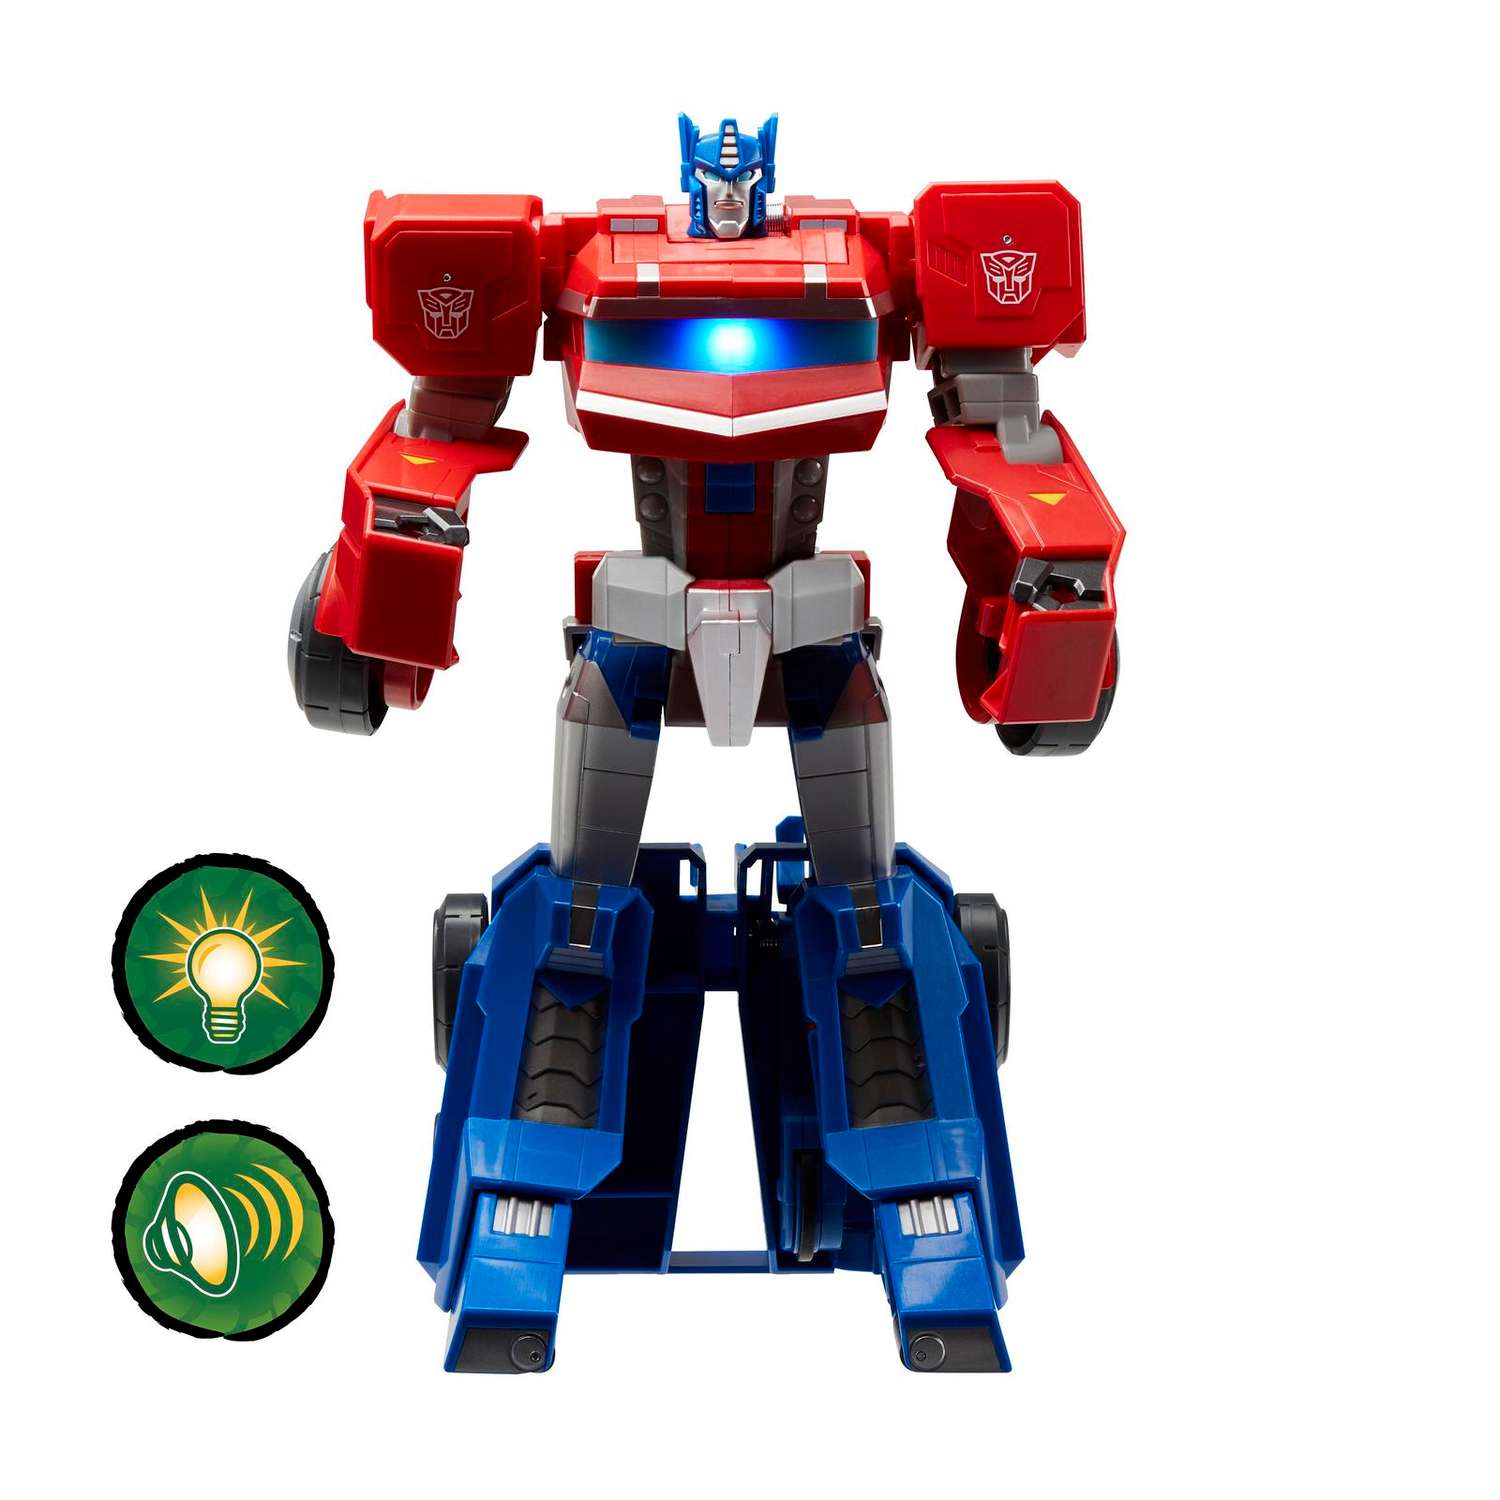 Фигурка Transformers Оптимус Прайм с автоматической трансформацией F27315X6 - фото 7